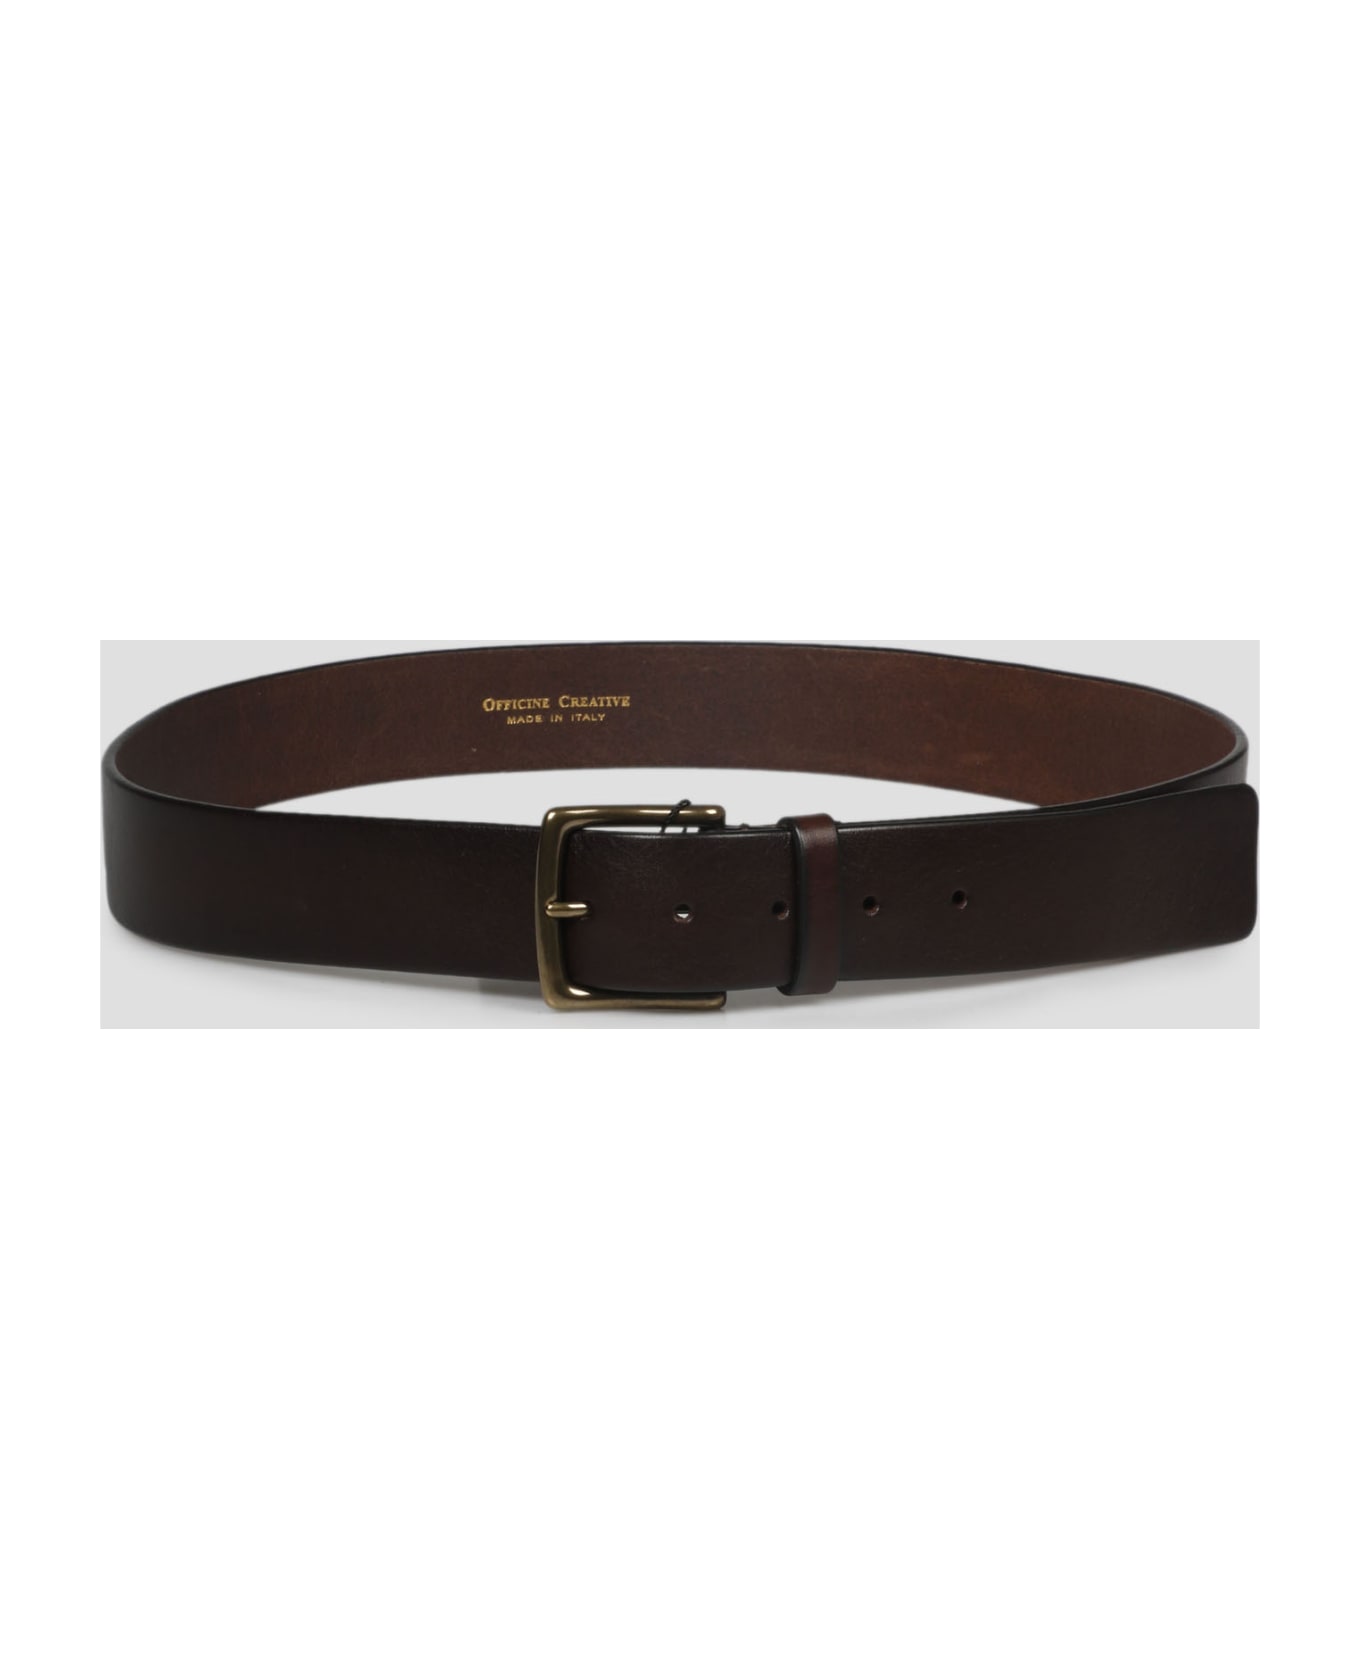 Officine Creative Oc Strip Leather Belt - Brown